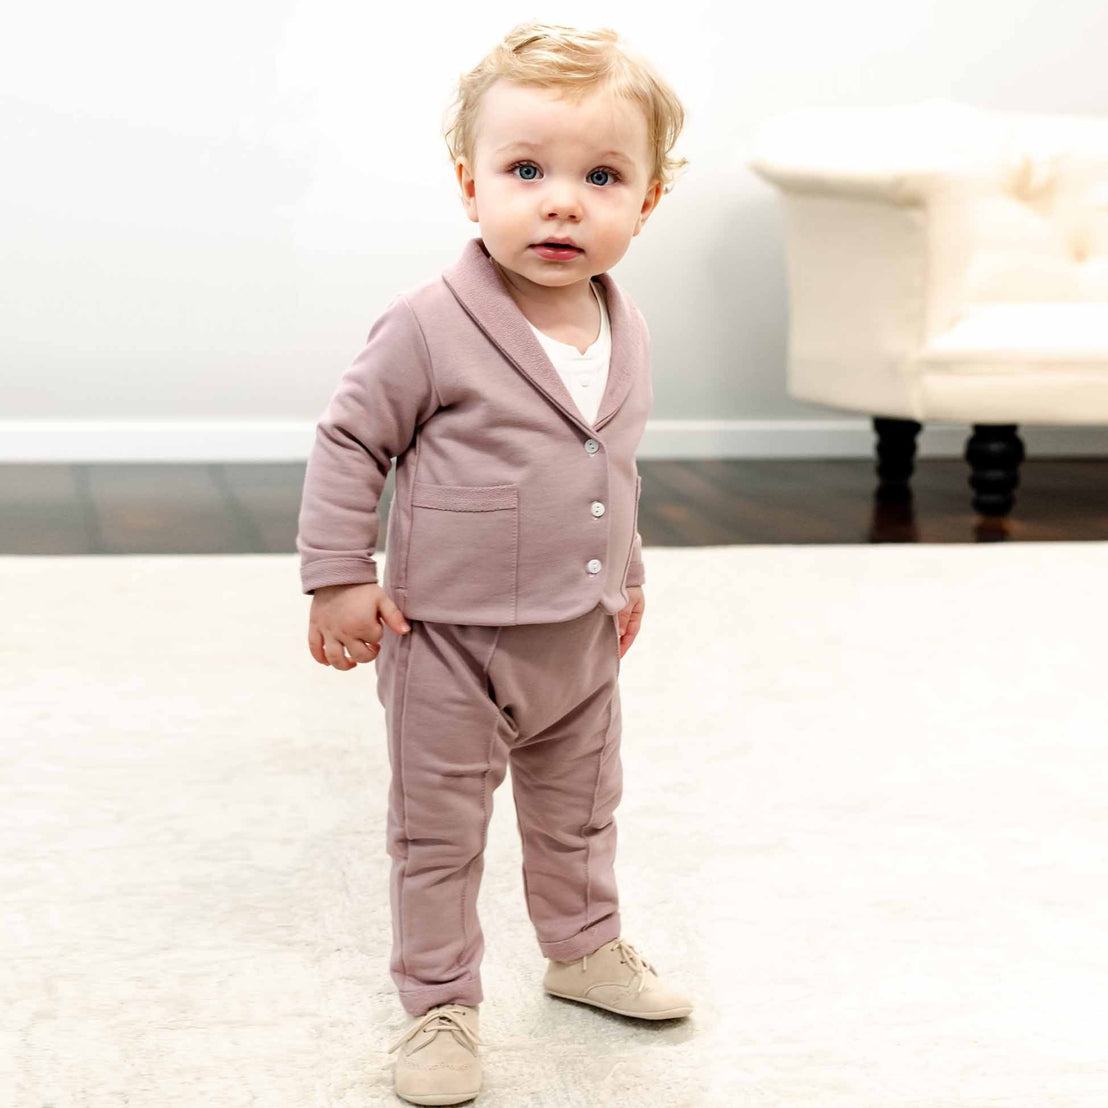 Baby boy standing in mauve suit